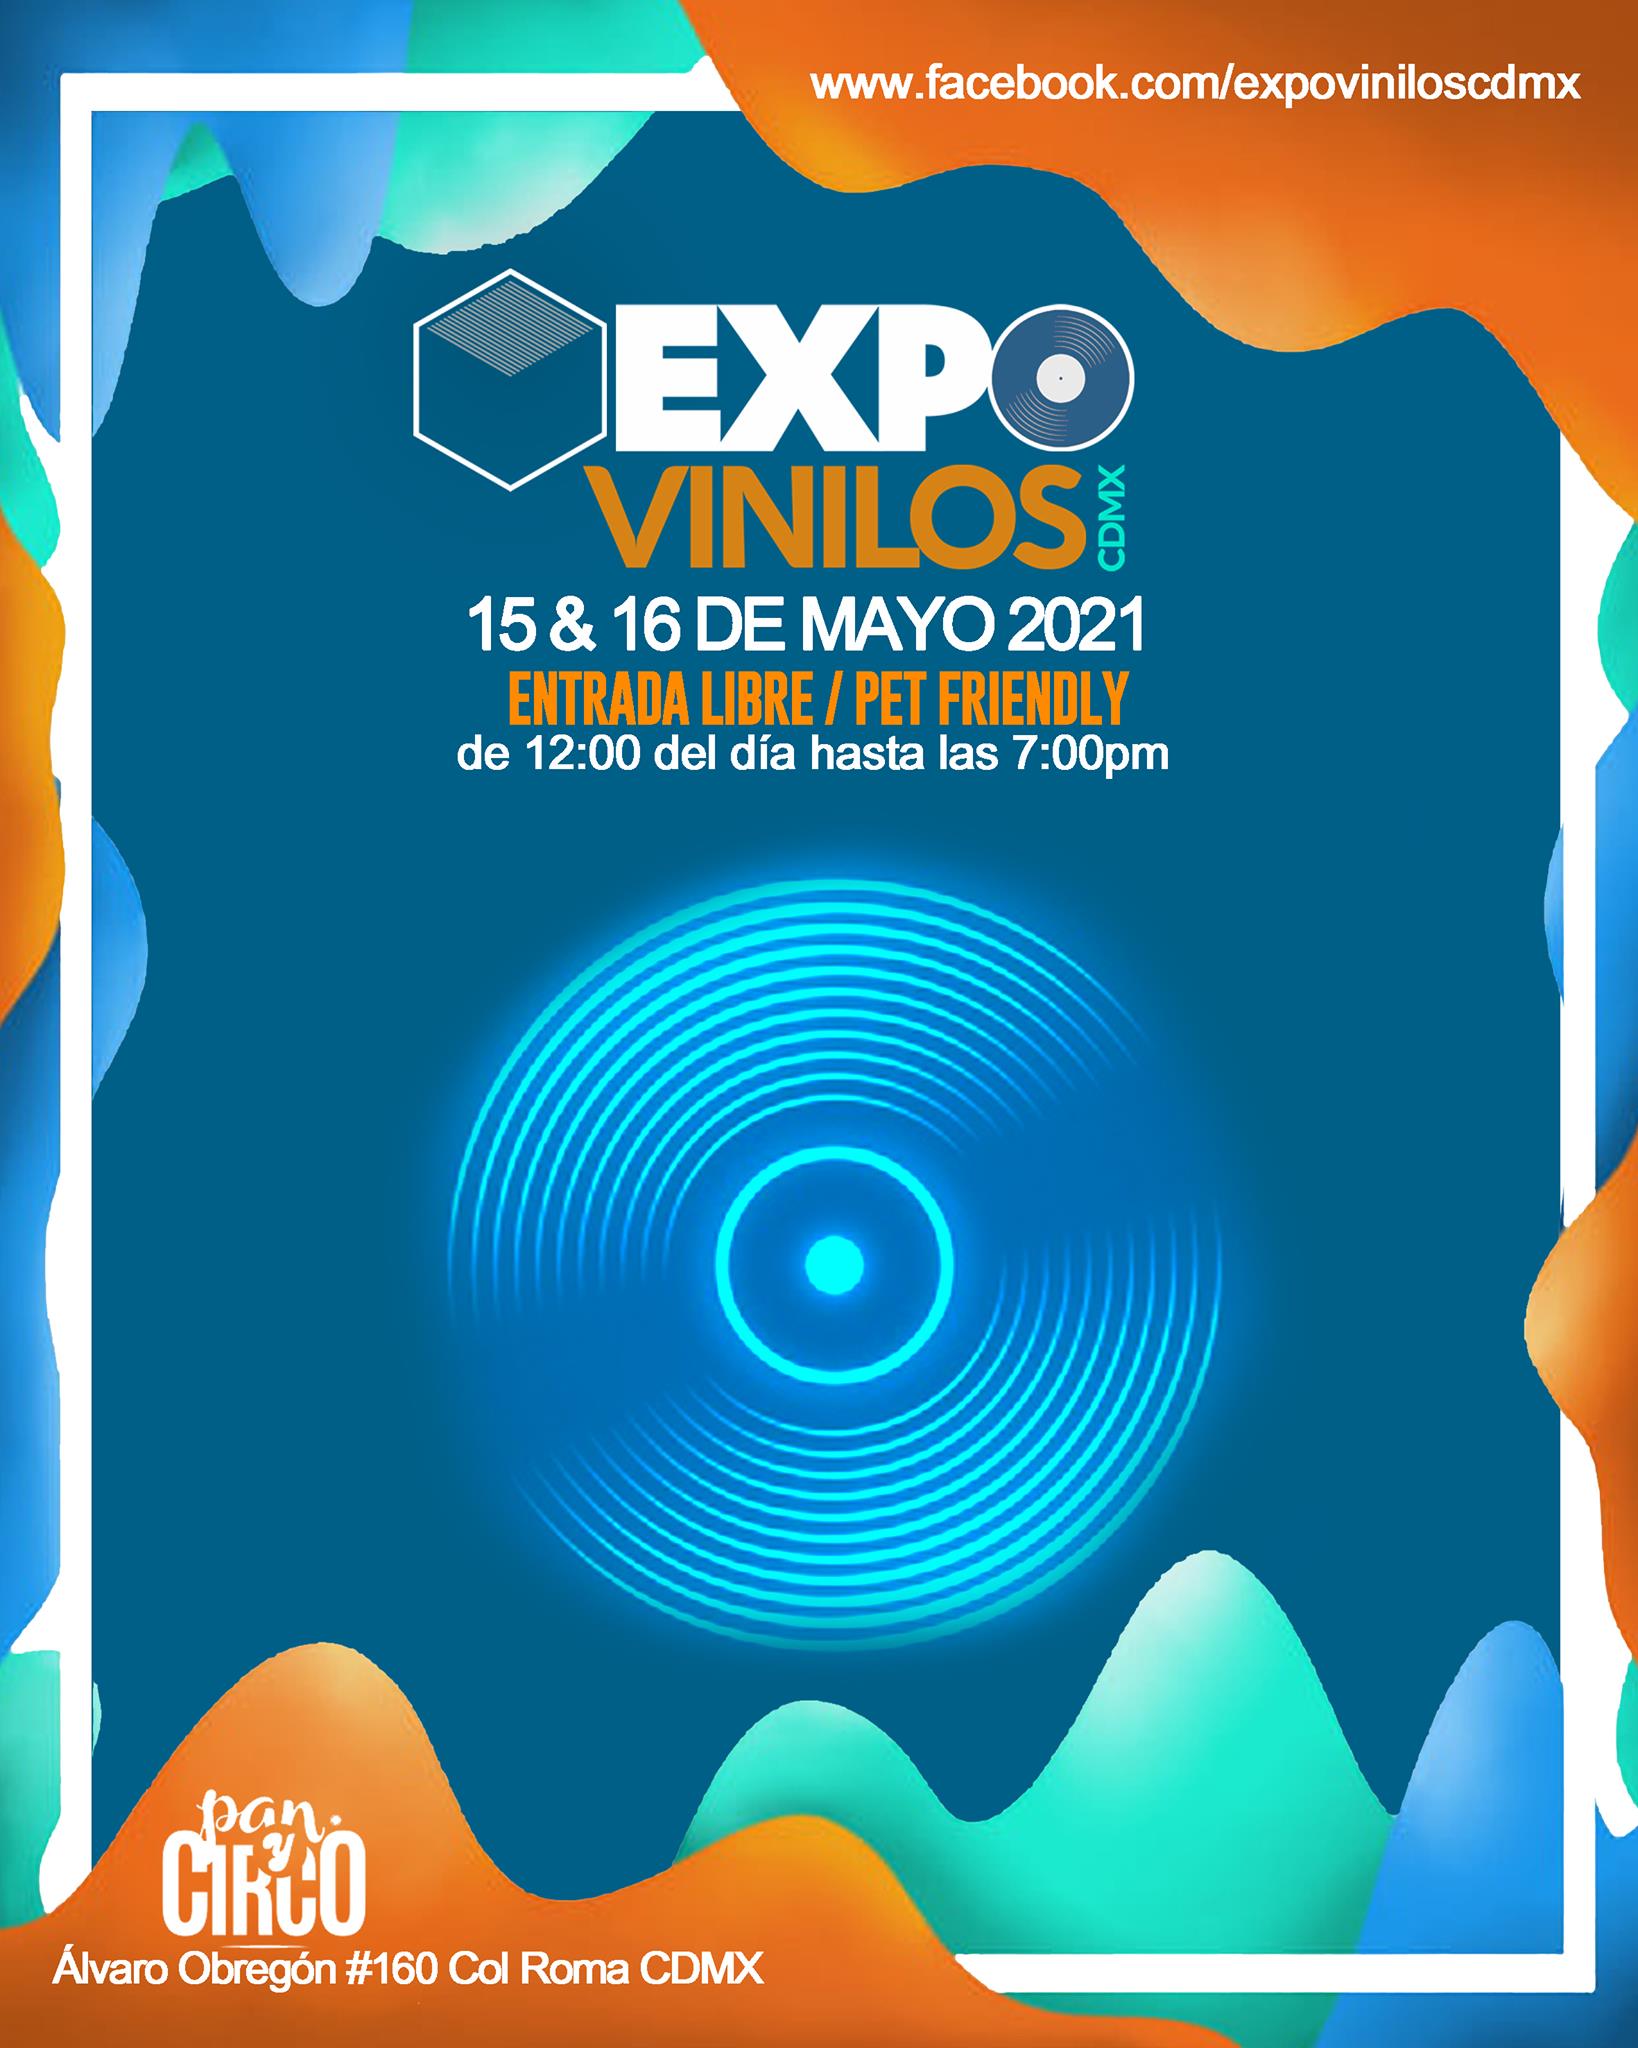 Expo vinilos_2021